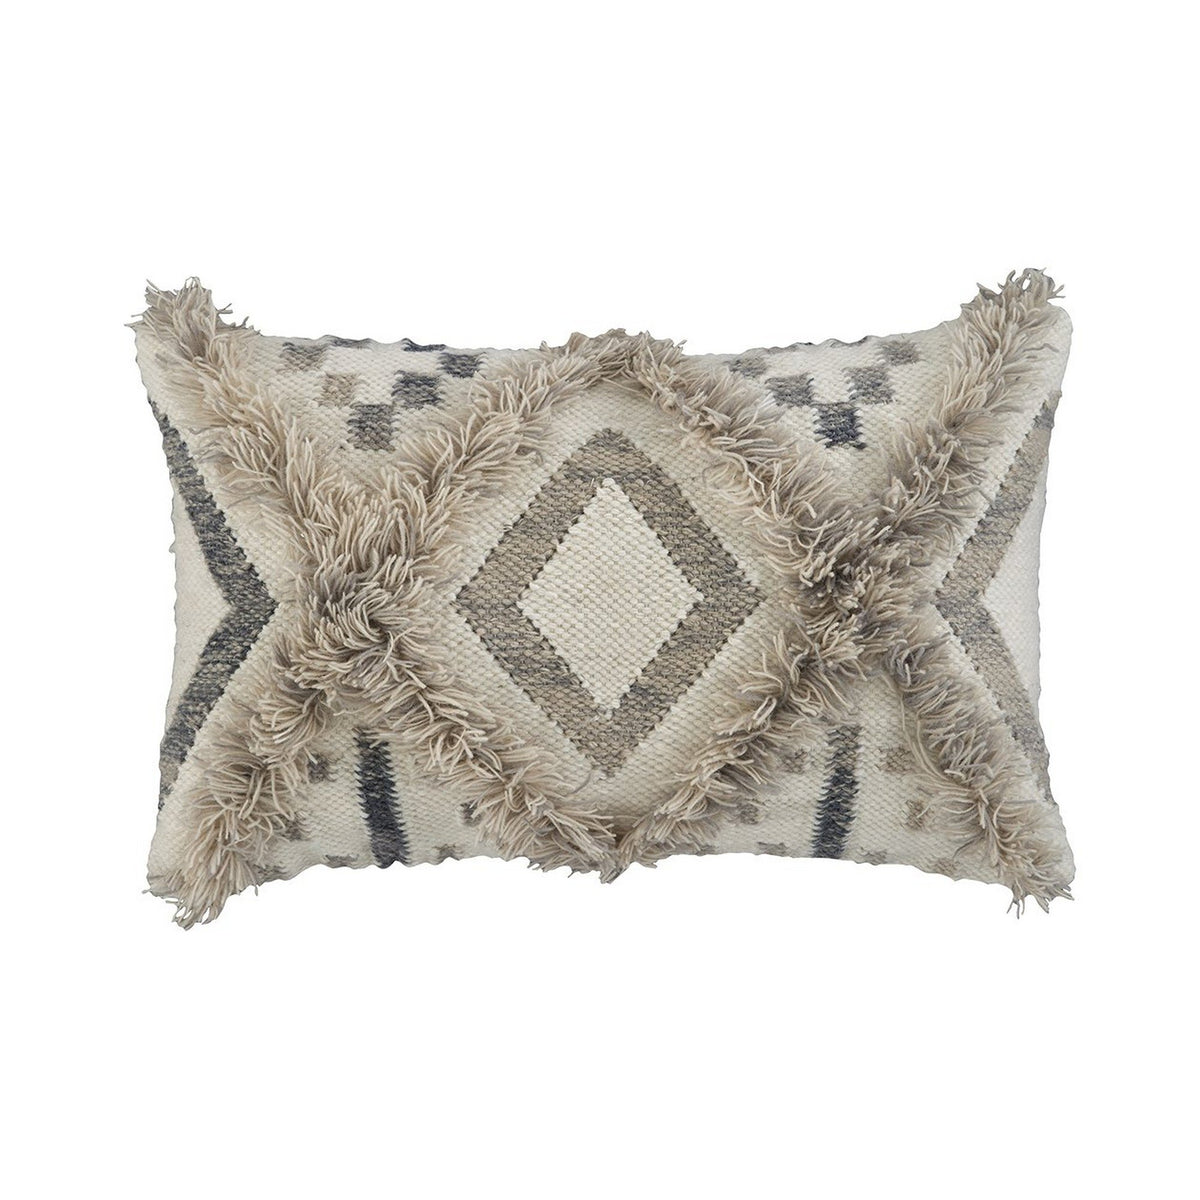 22 x 14 Woolen Face Accent Pillow with Fringe Details, Set of 4, Cream - BM227356